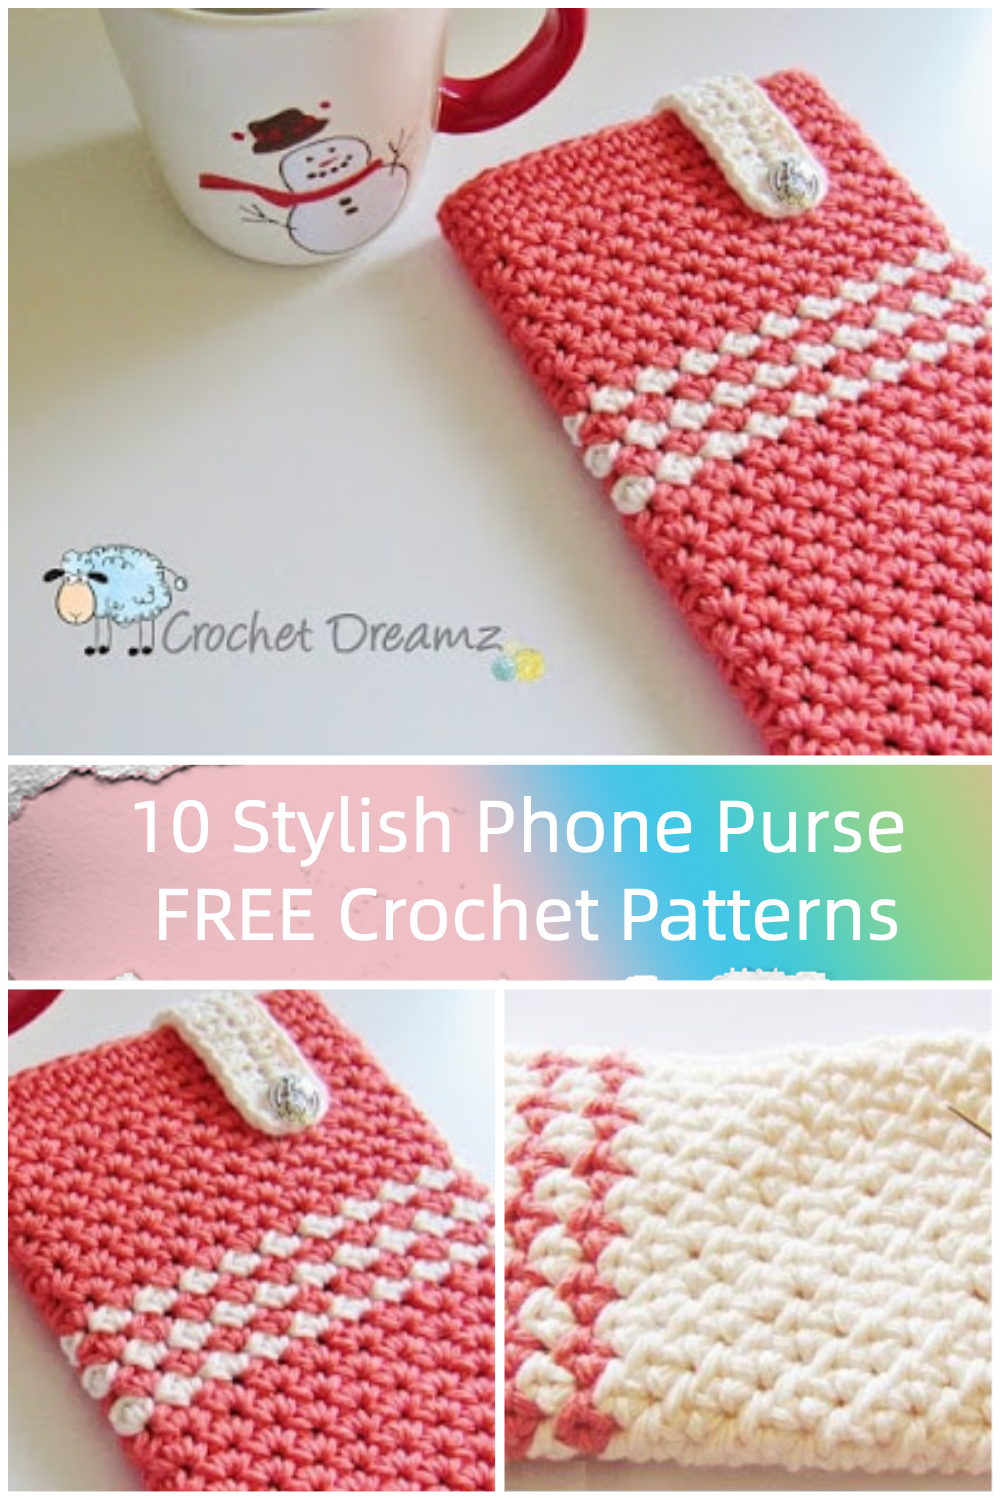 10 Crochet Phone Purse FREE Patterns - iGOODideas.com